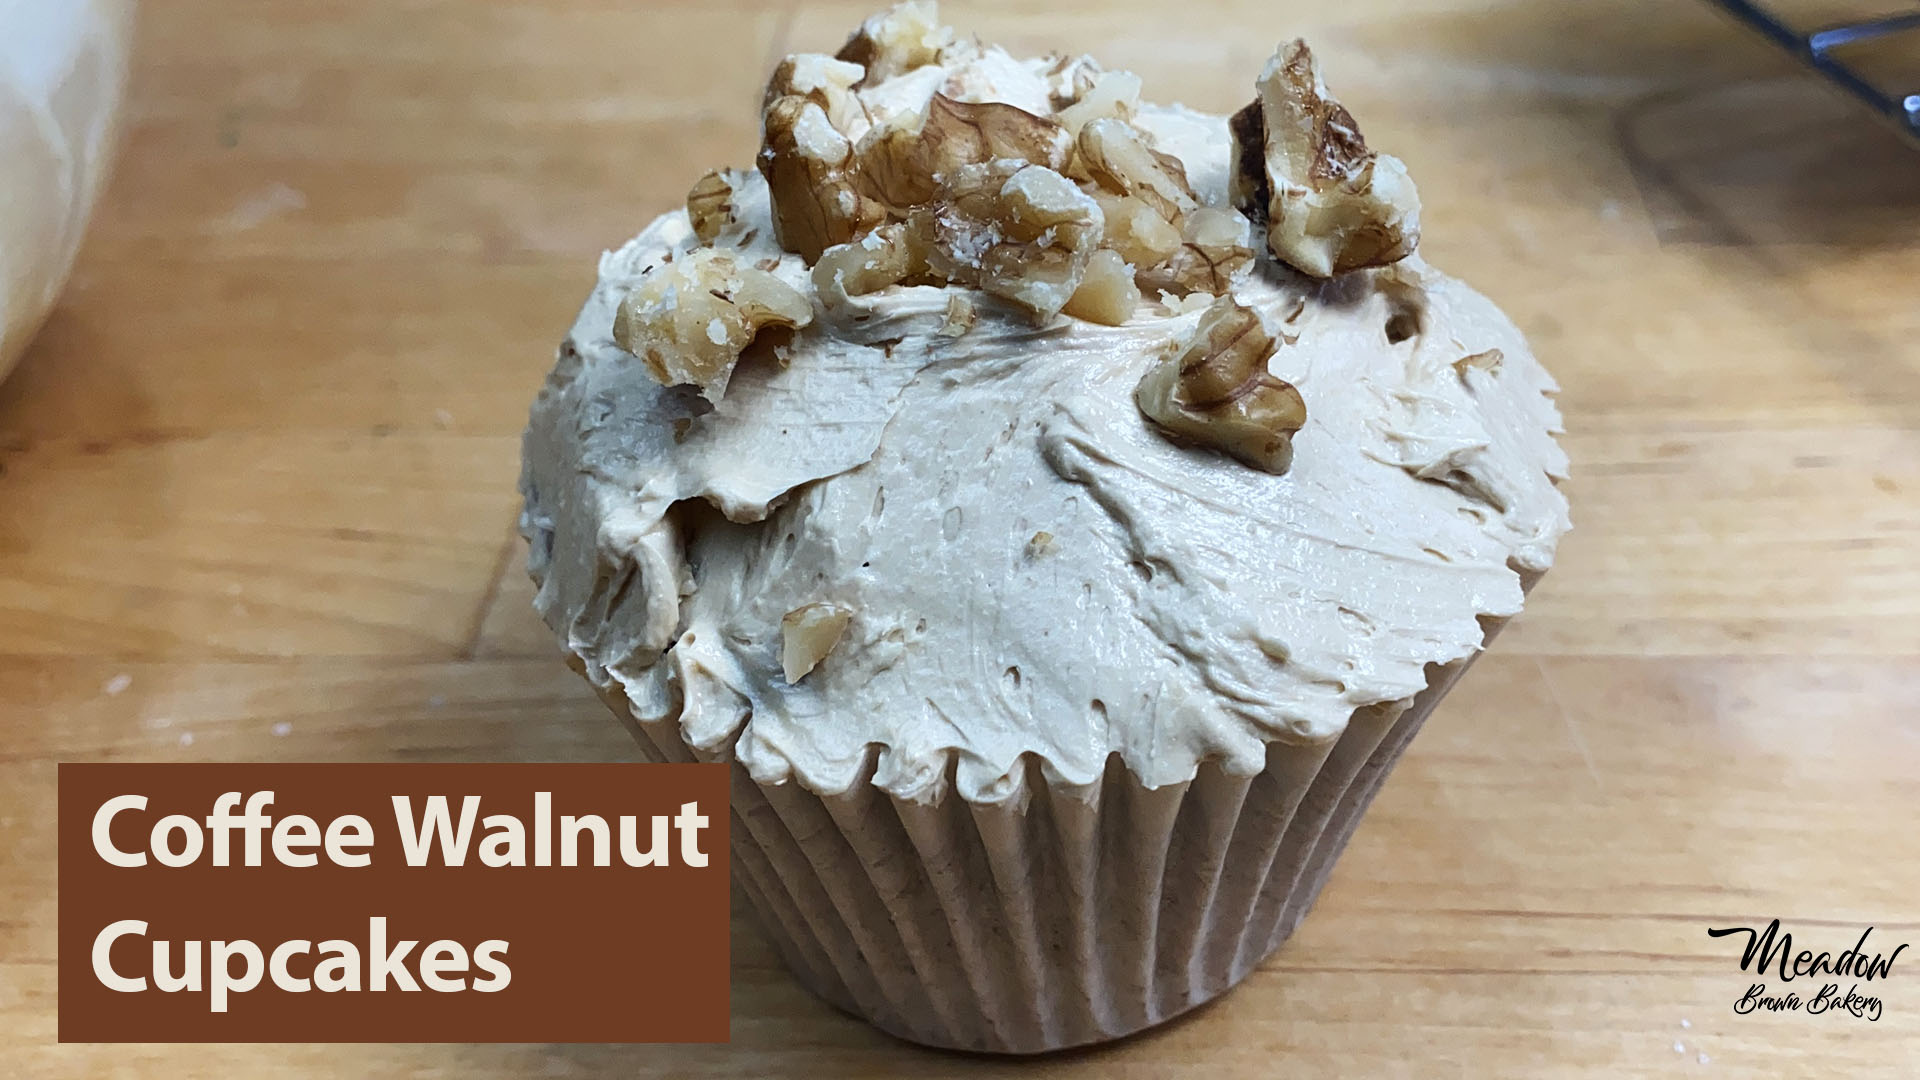 Coffee and walnut cupcakes